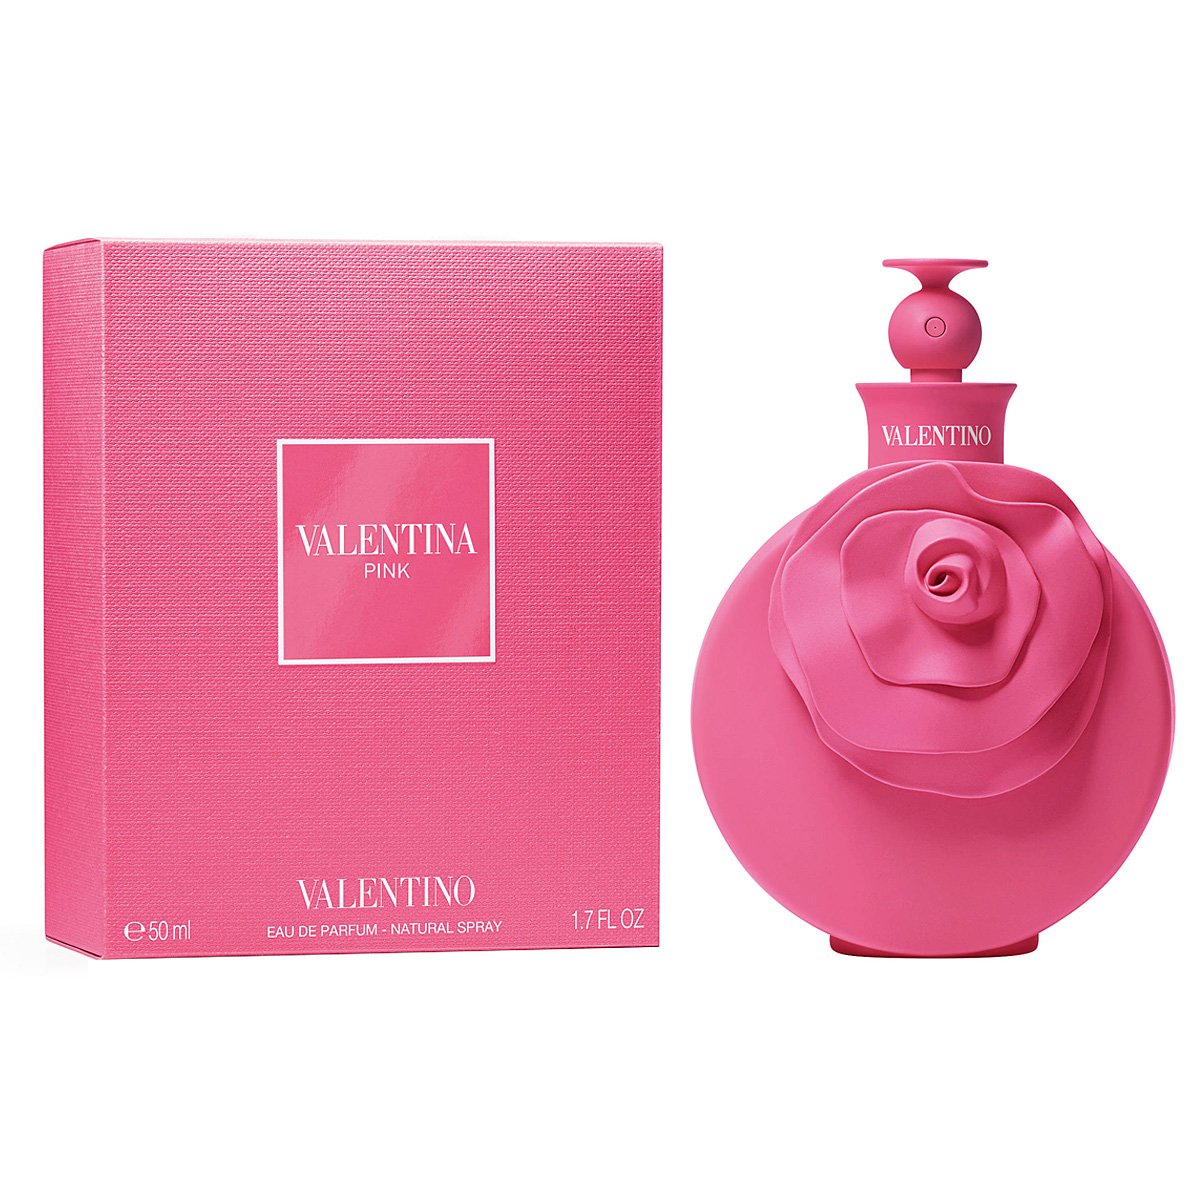 Купить Парфюмерная вода Valentino, Valentino Valentina Pink 50.0ml, Италия